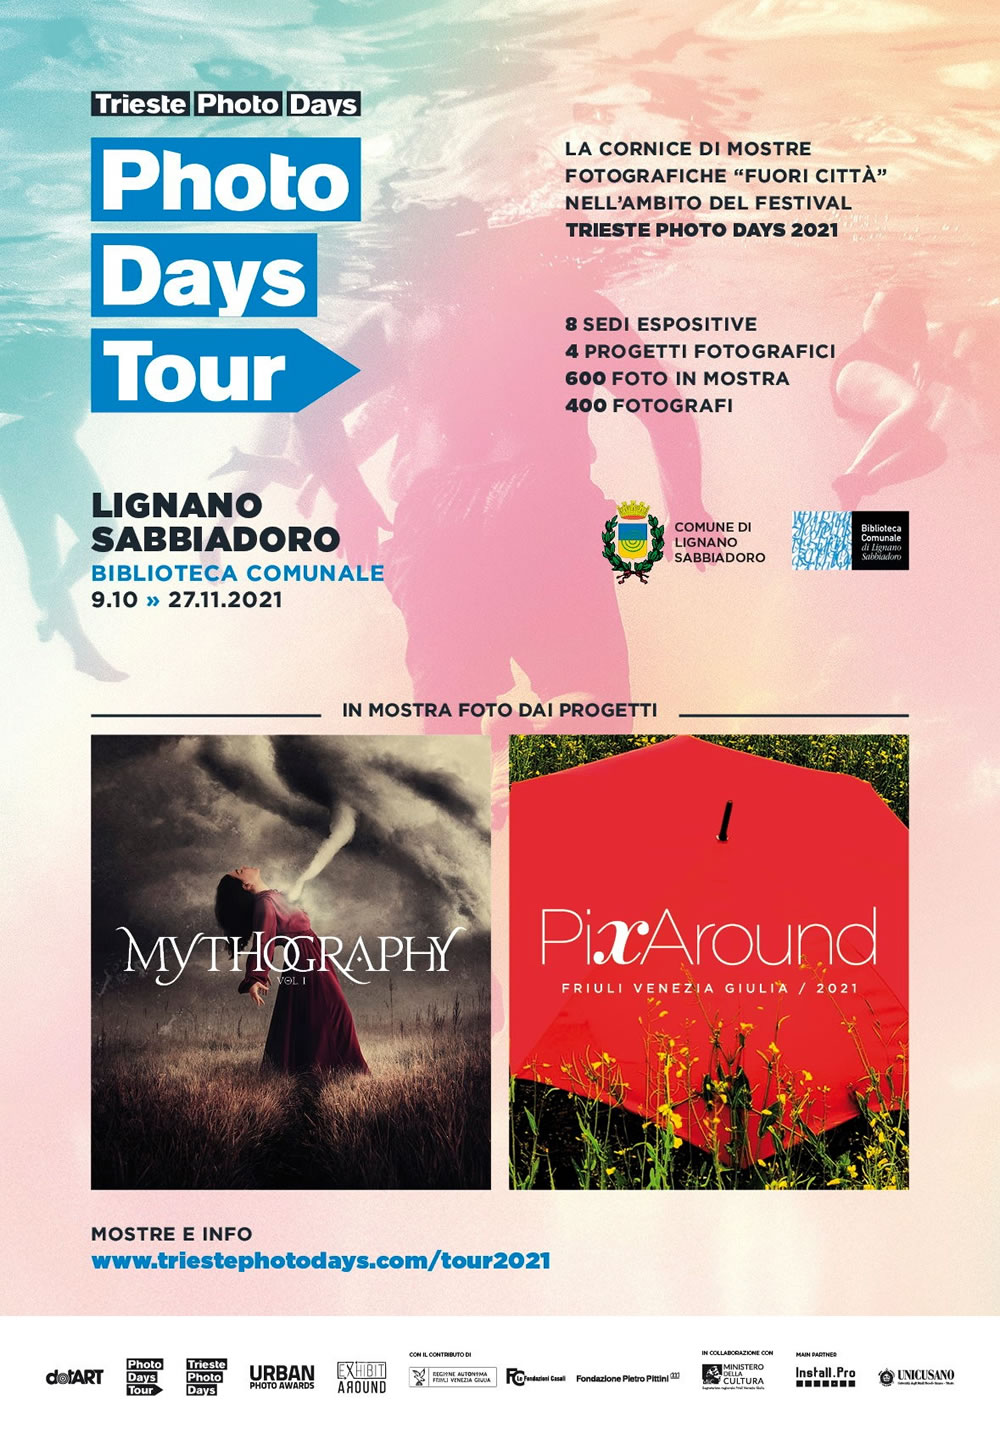 Photo days tour Lignano Sabbiadoro